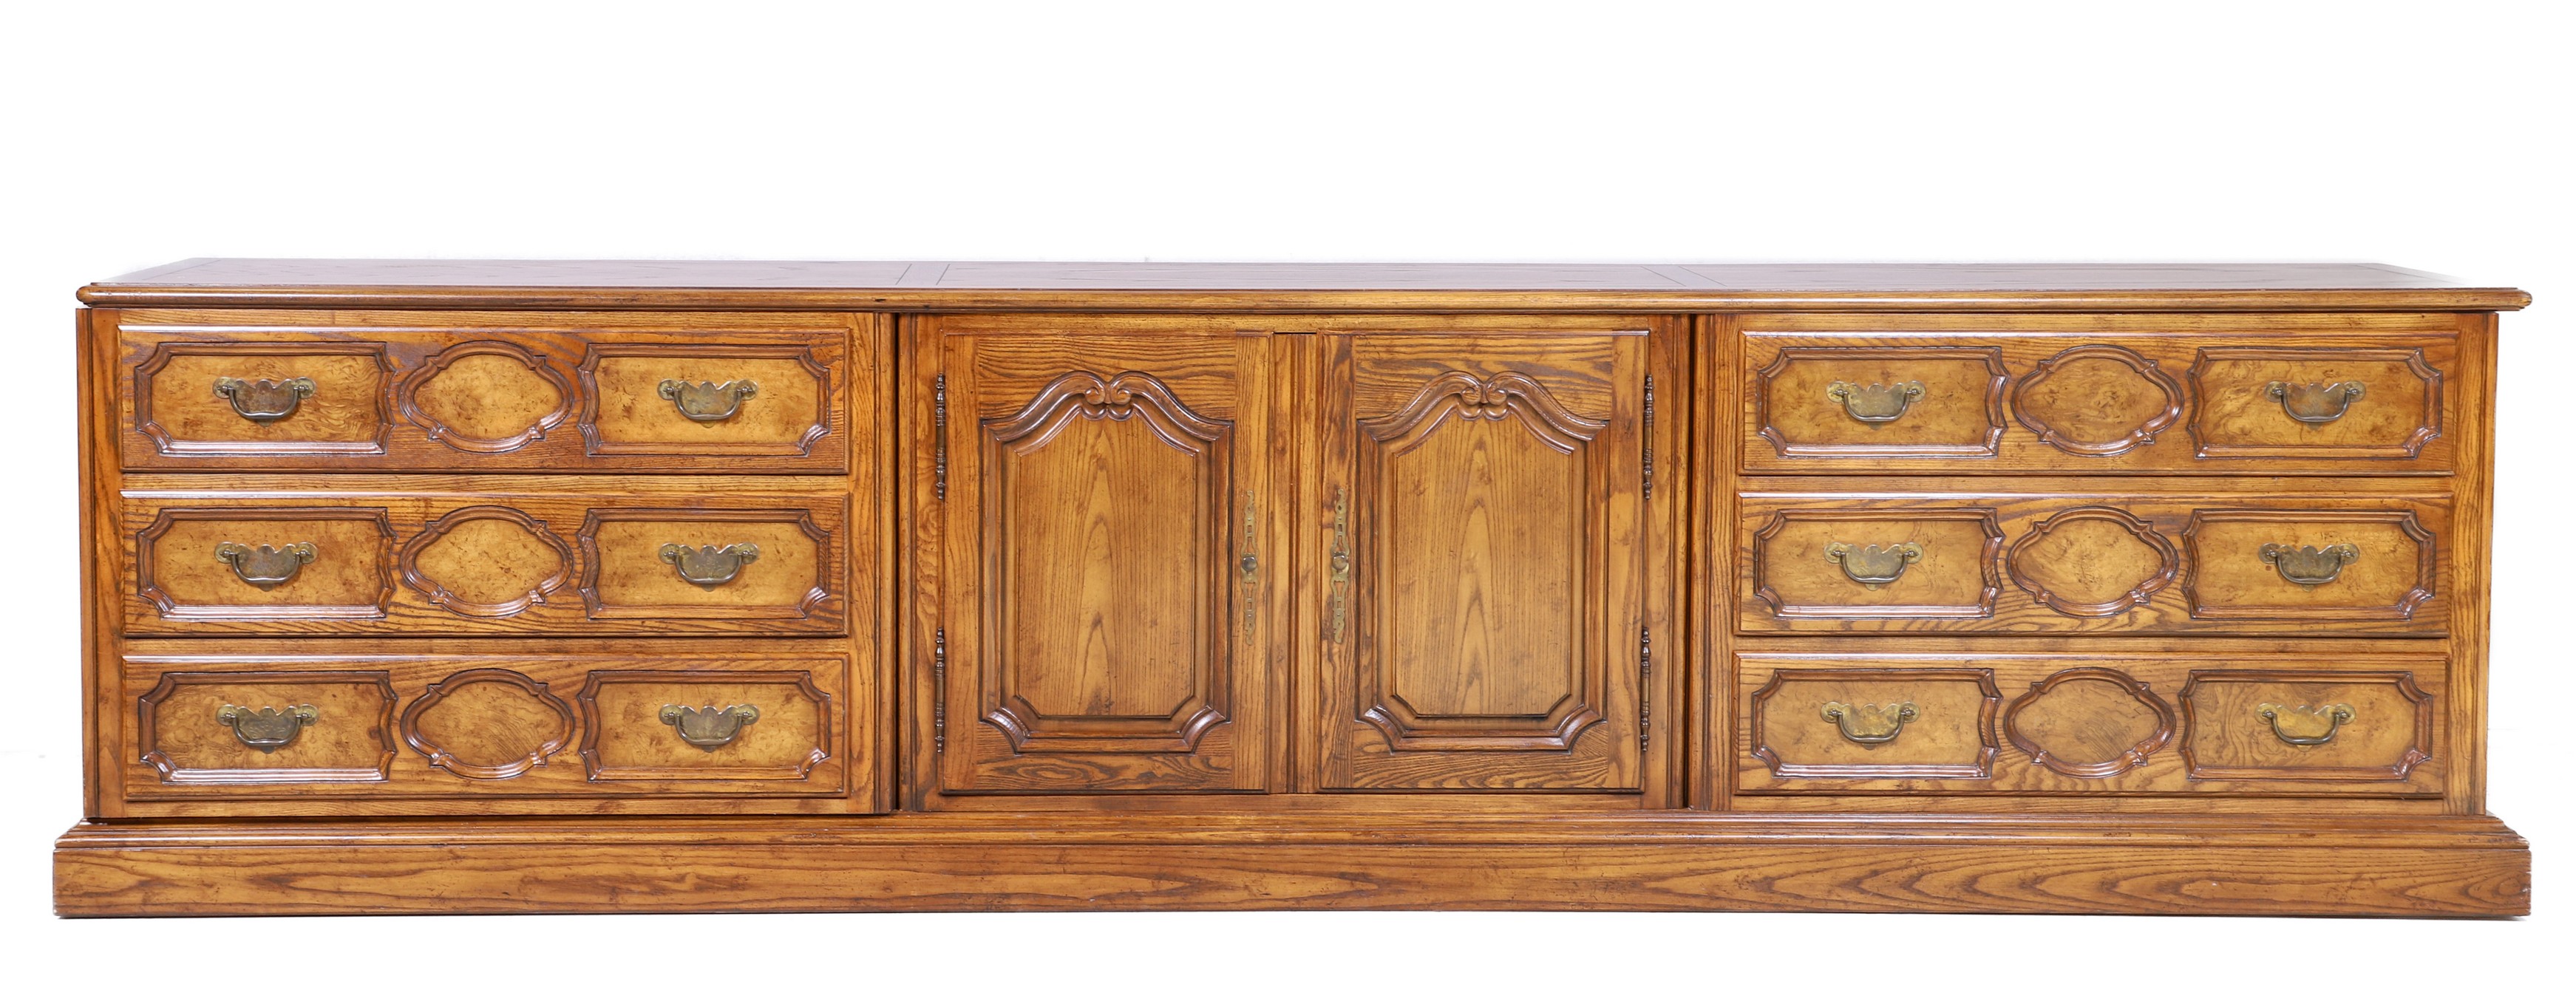 (5) part oak sideboard, center